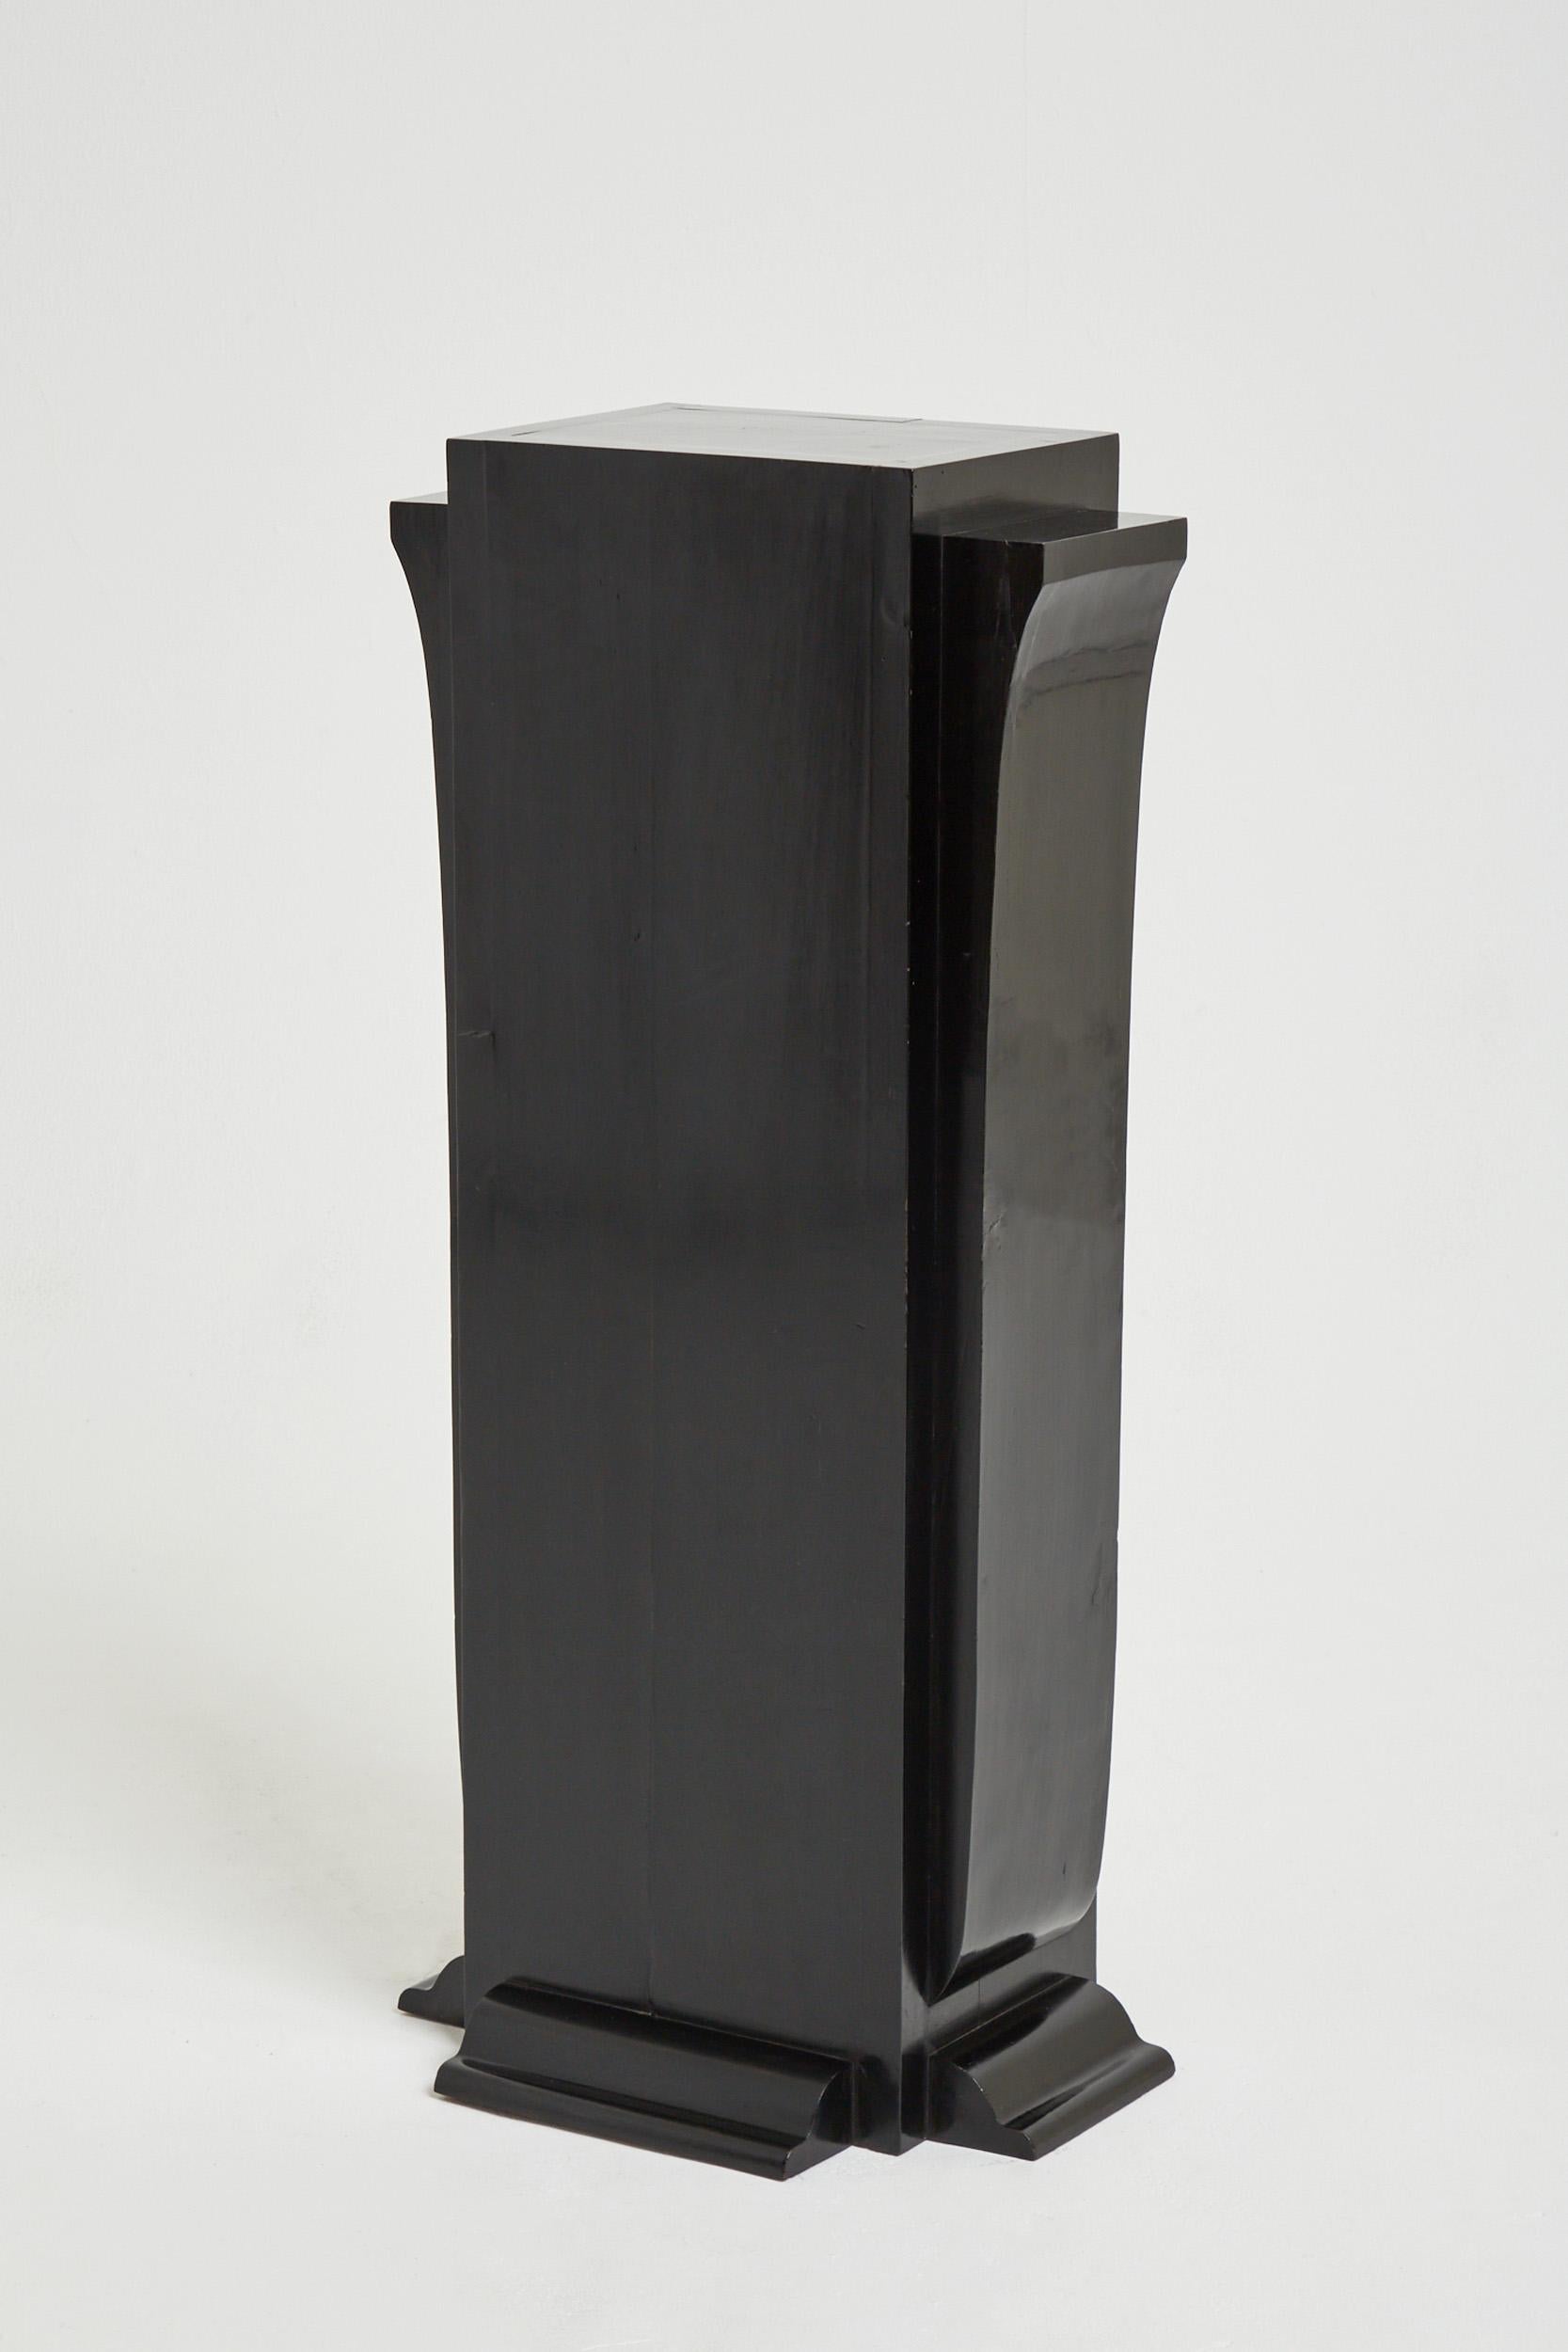 French Art Deco Black Lacquer Pedestal